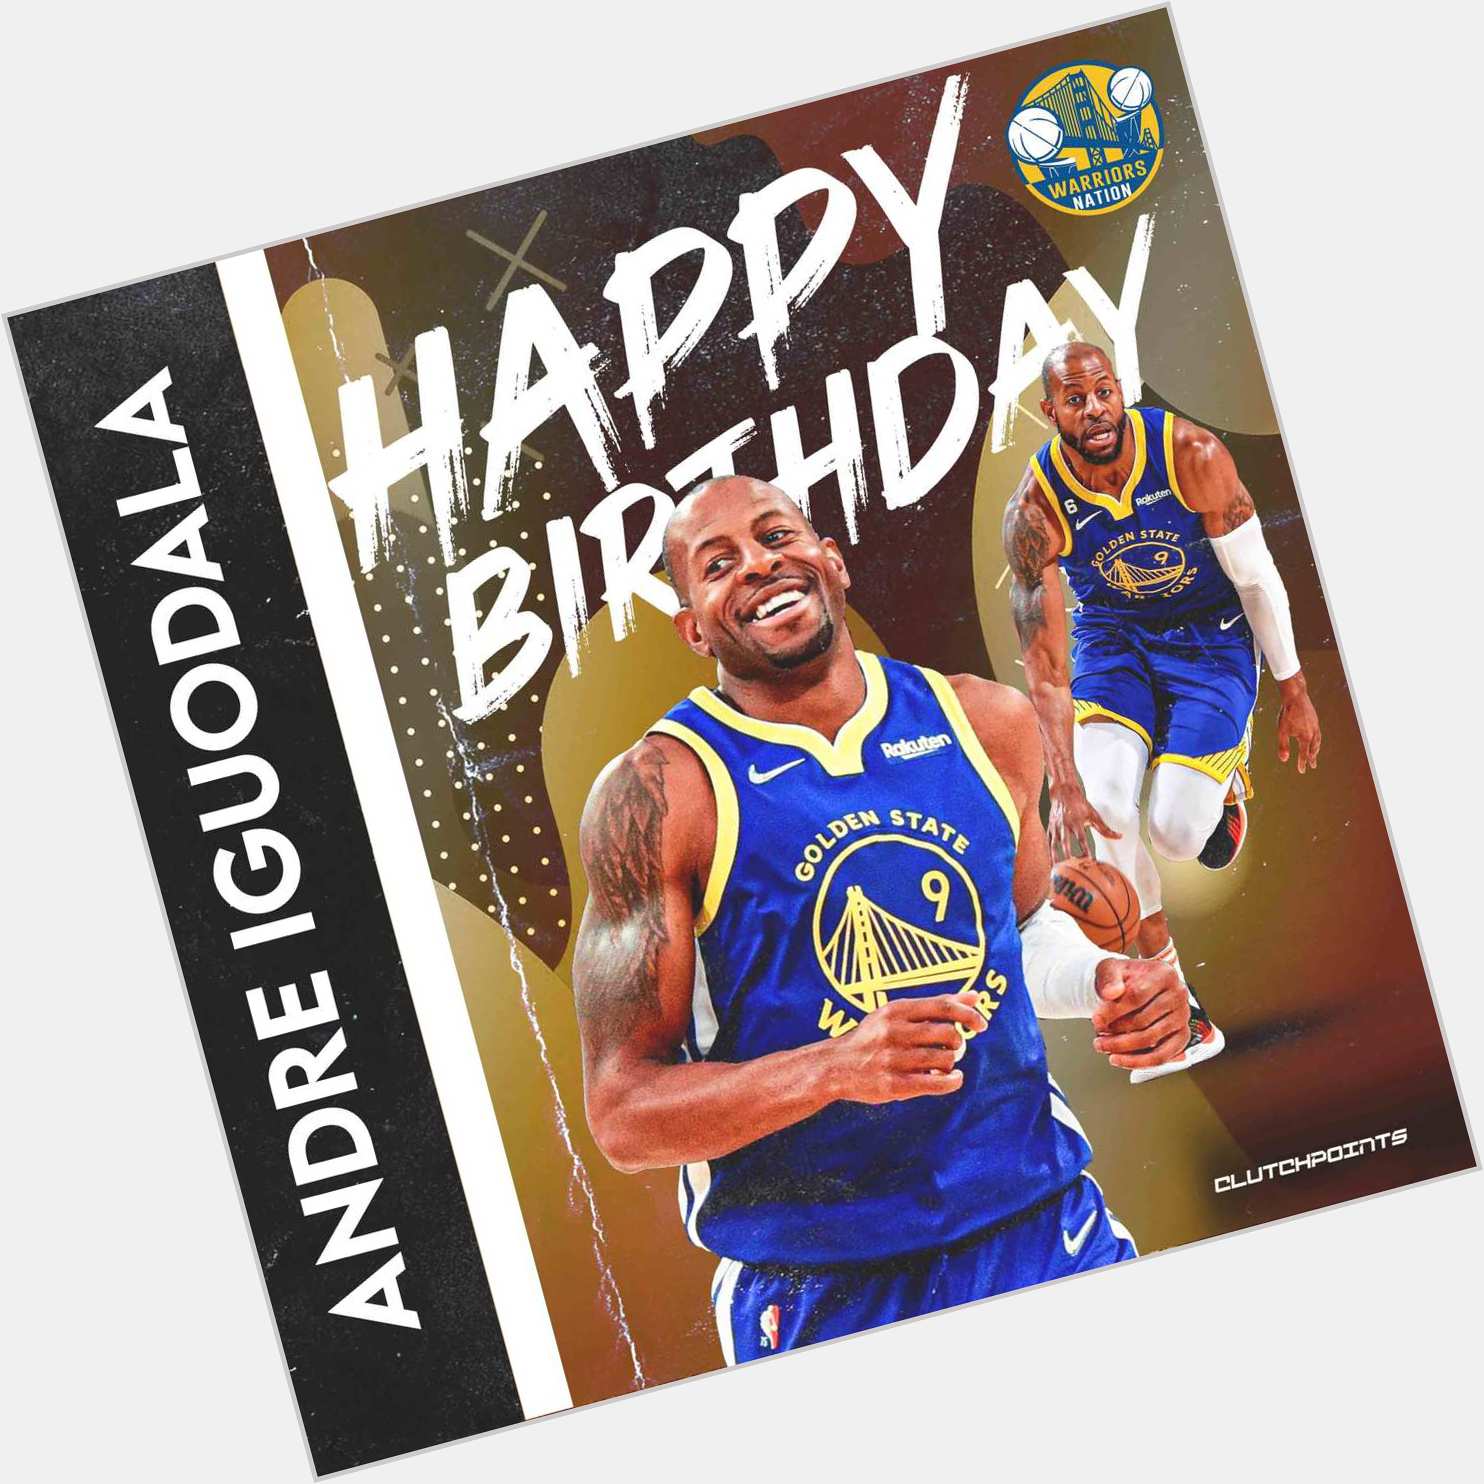 YewwPULSE \Wishing Andre Iguodala a happy 39th birthday \  see more 